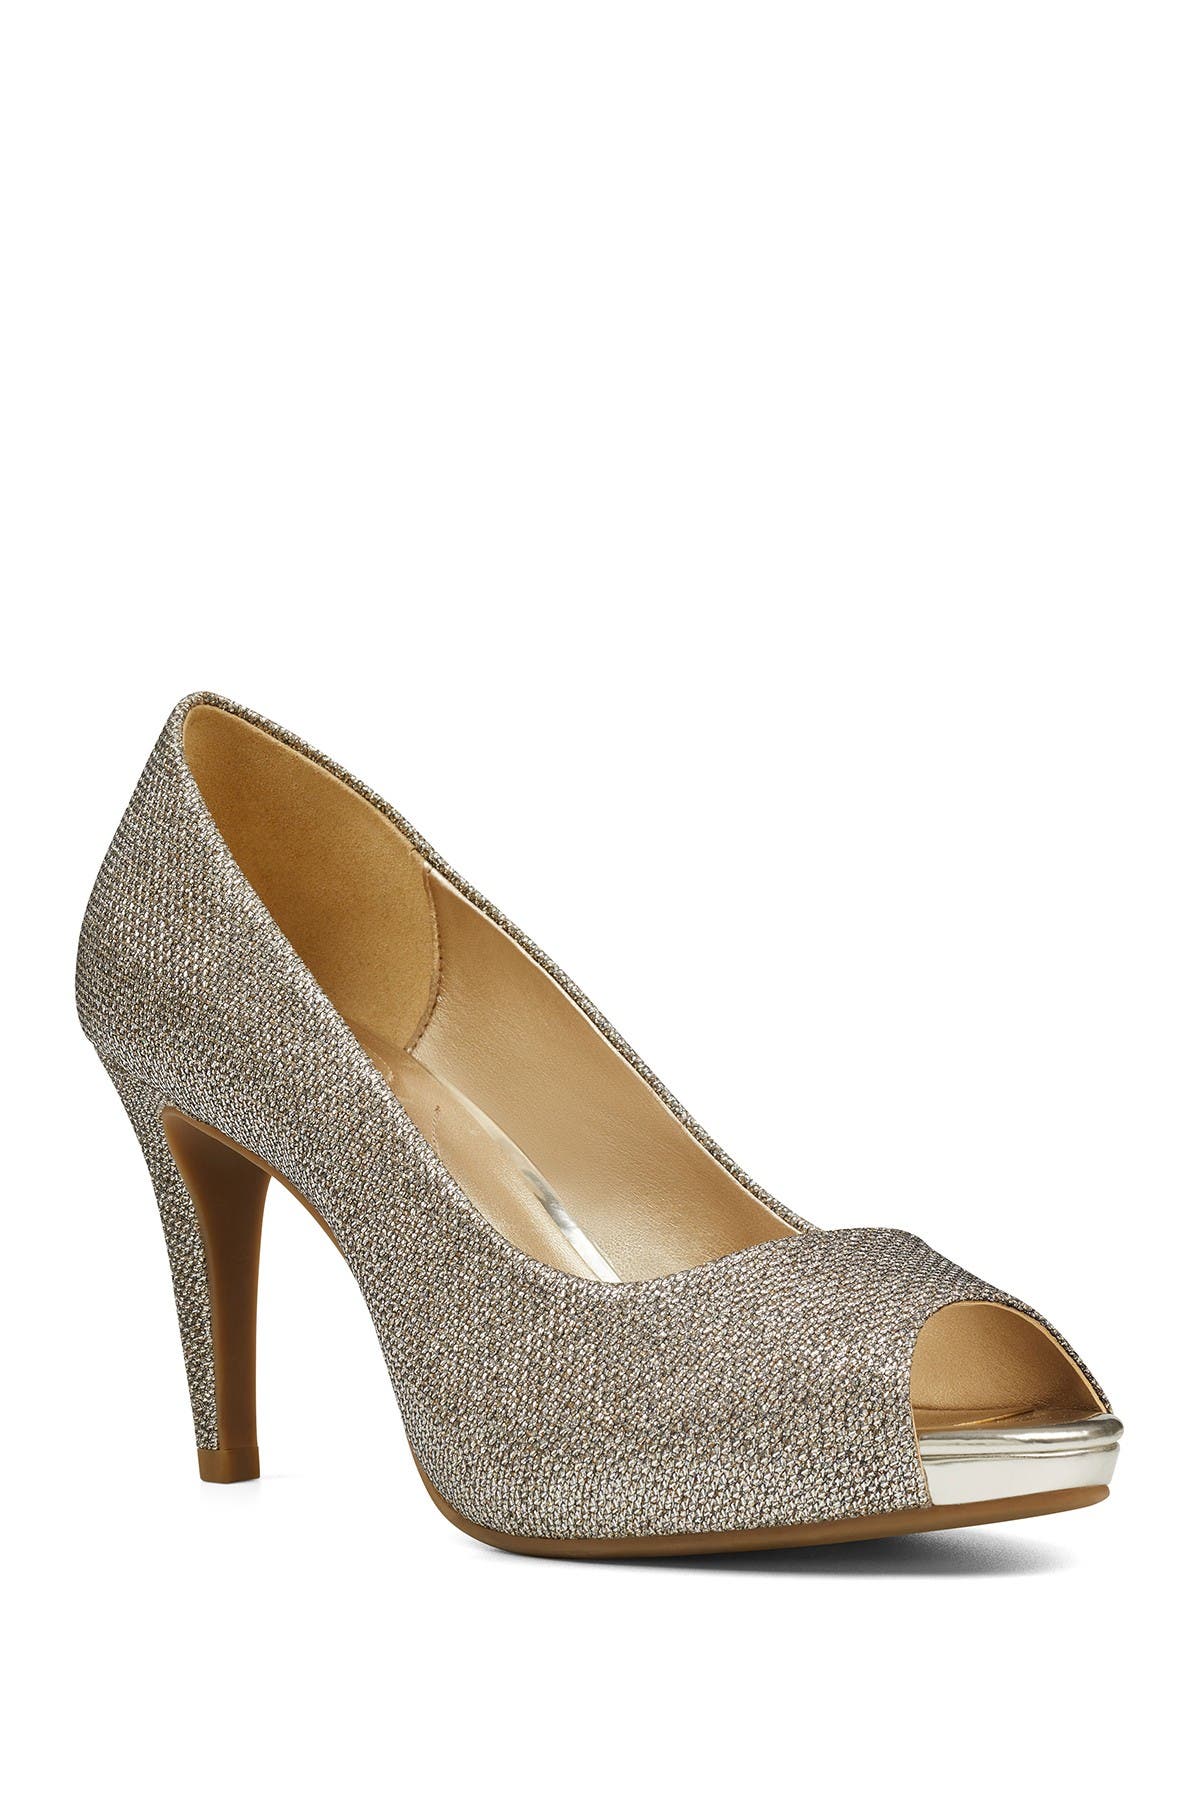 bandolino gold heels